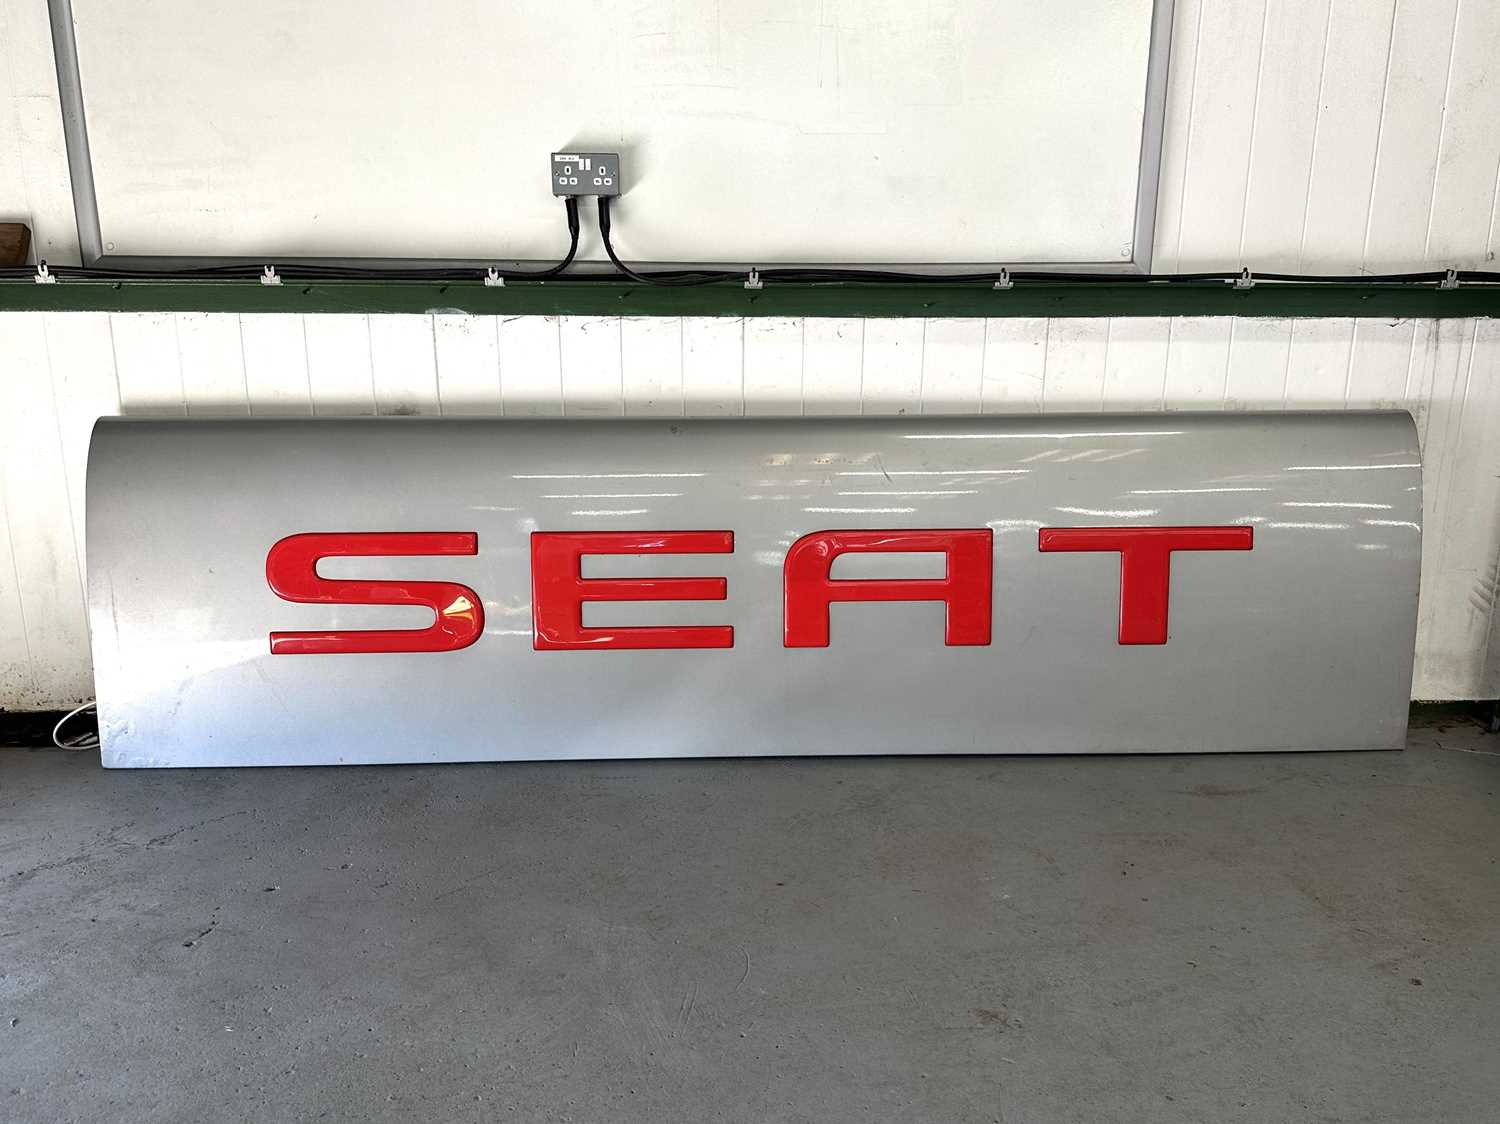 Seat Sign - NO RESERVE